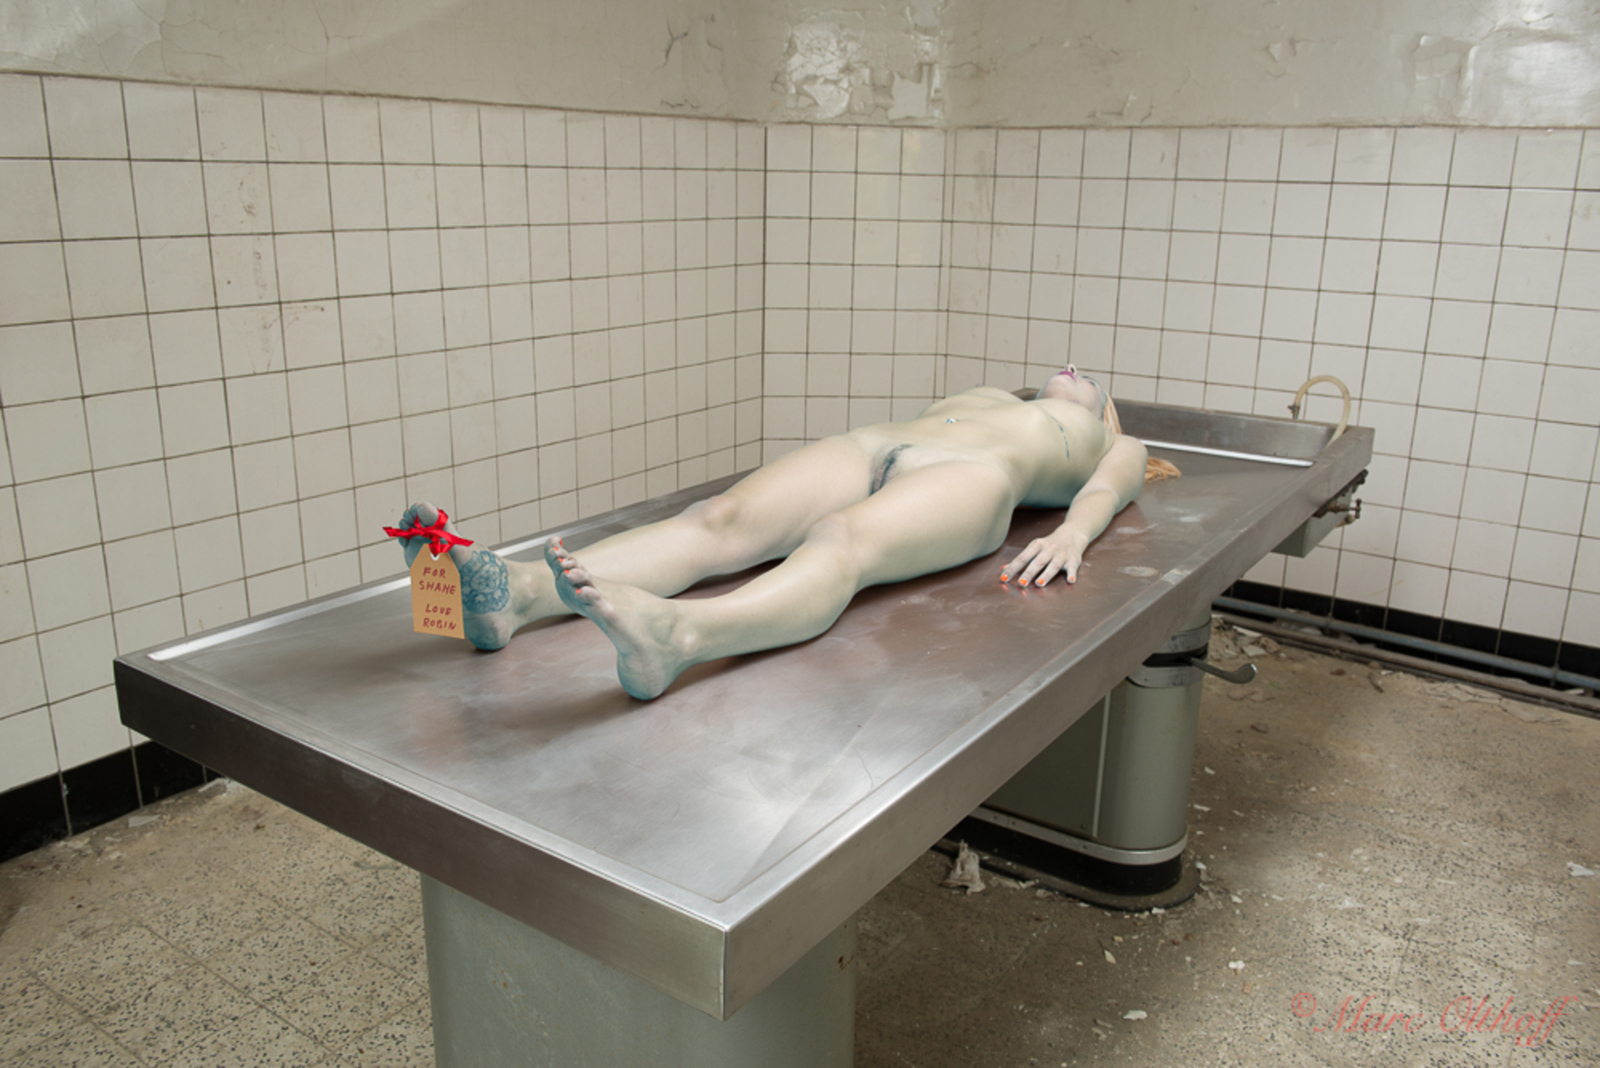 Naked morgue scenes